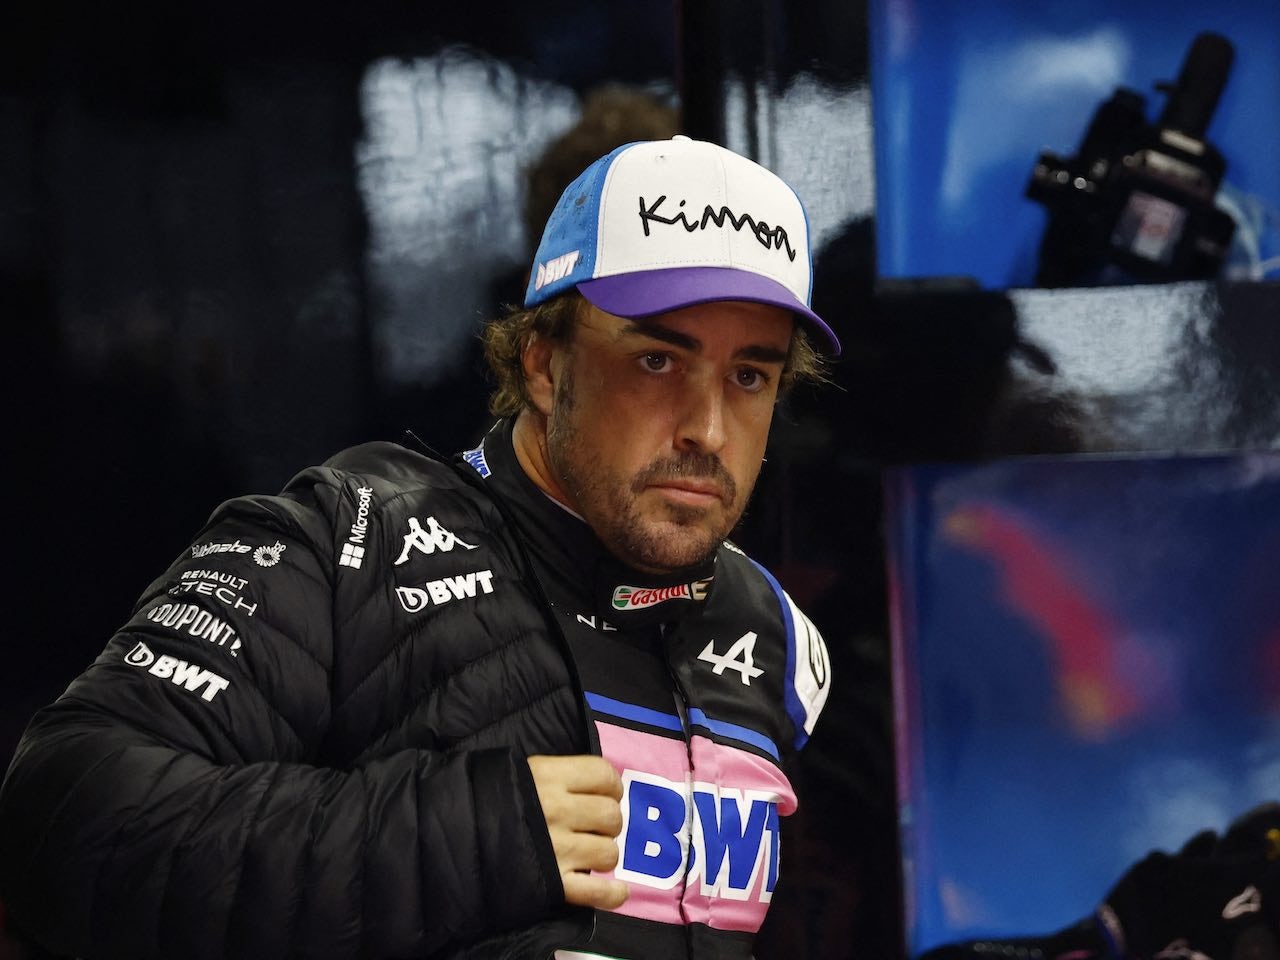 Alonso will thrive at Aston Martin - Briatore